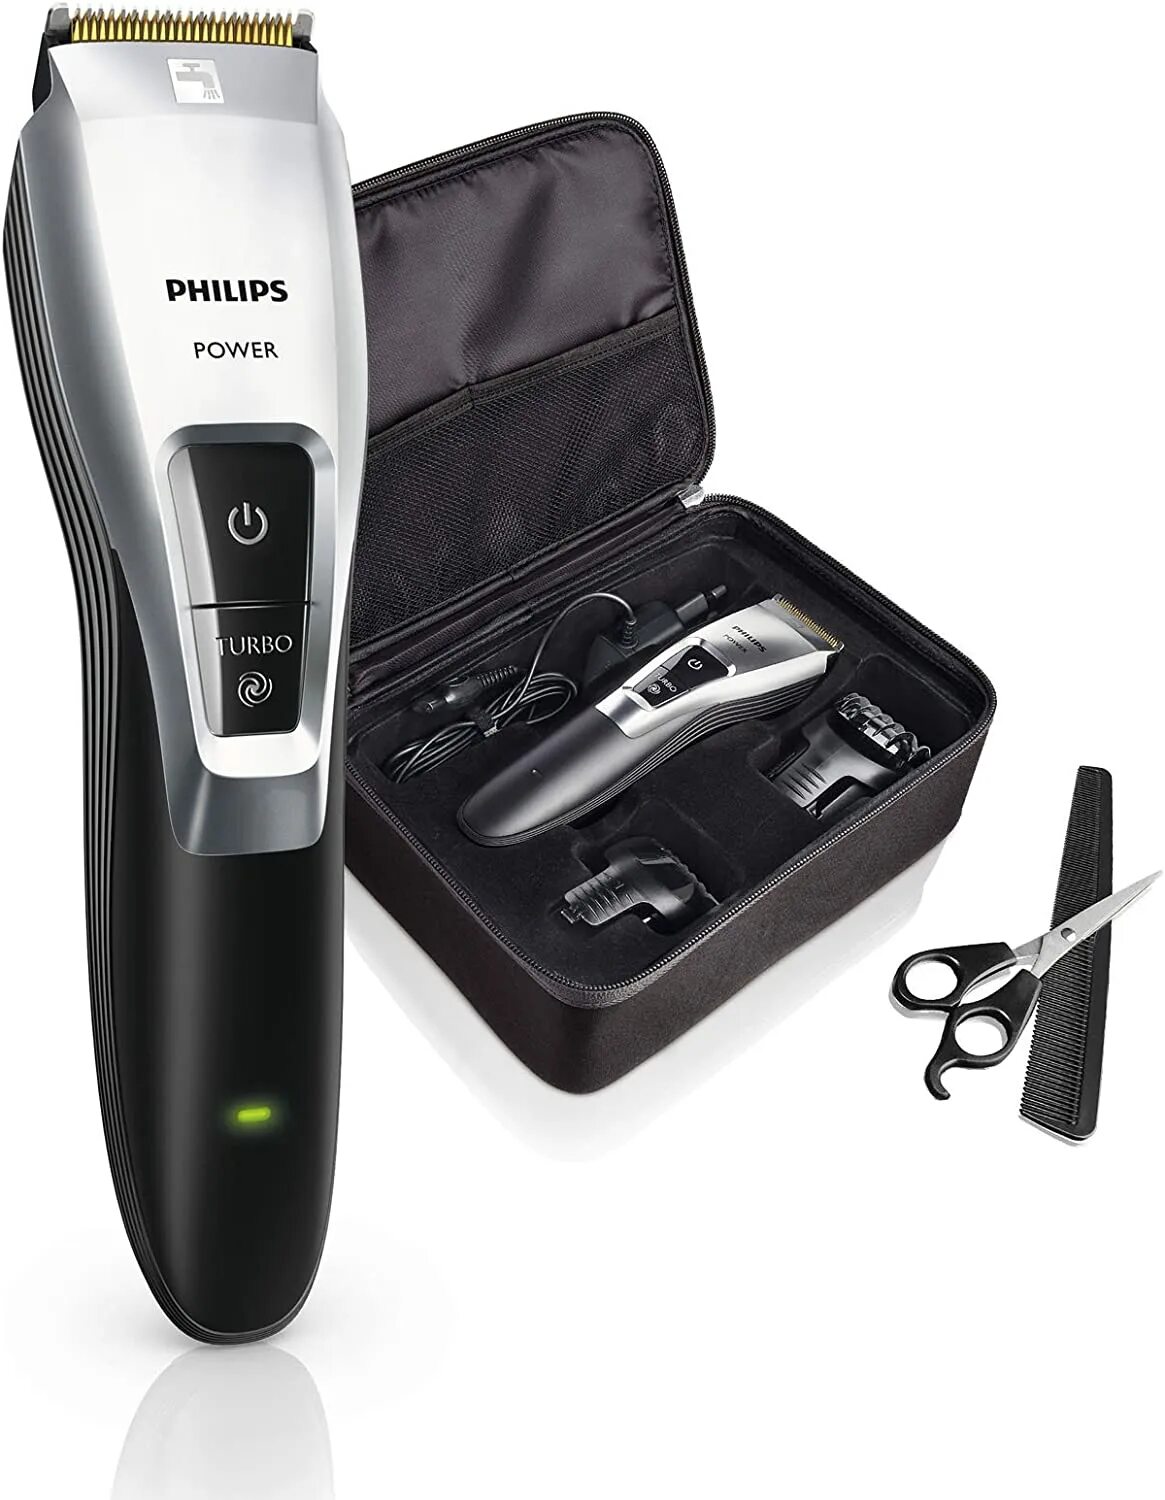 Купить электрическую машинку стрижки. Philips qc5380. Машинка для стрижки Philips qc5380. Филипс машинка для стрижки волос qc5380 лезвия. Машинка для стрижки Philips qc5380/15.